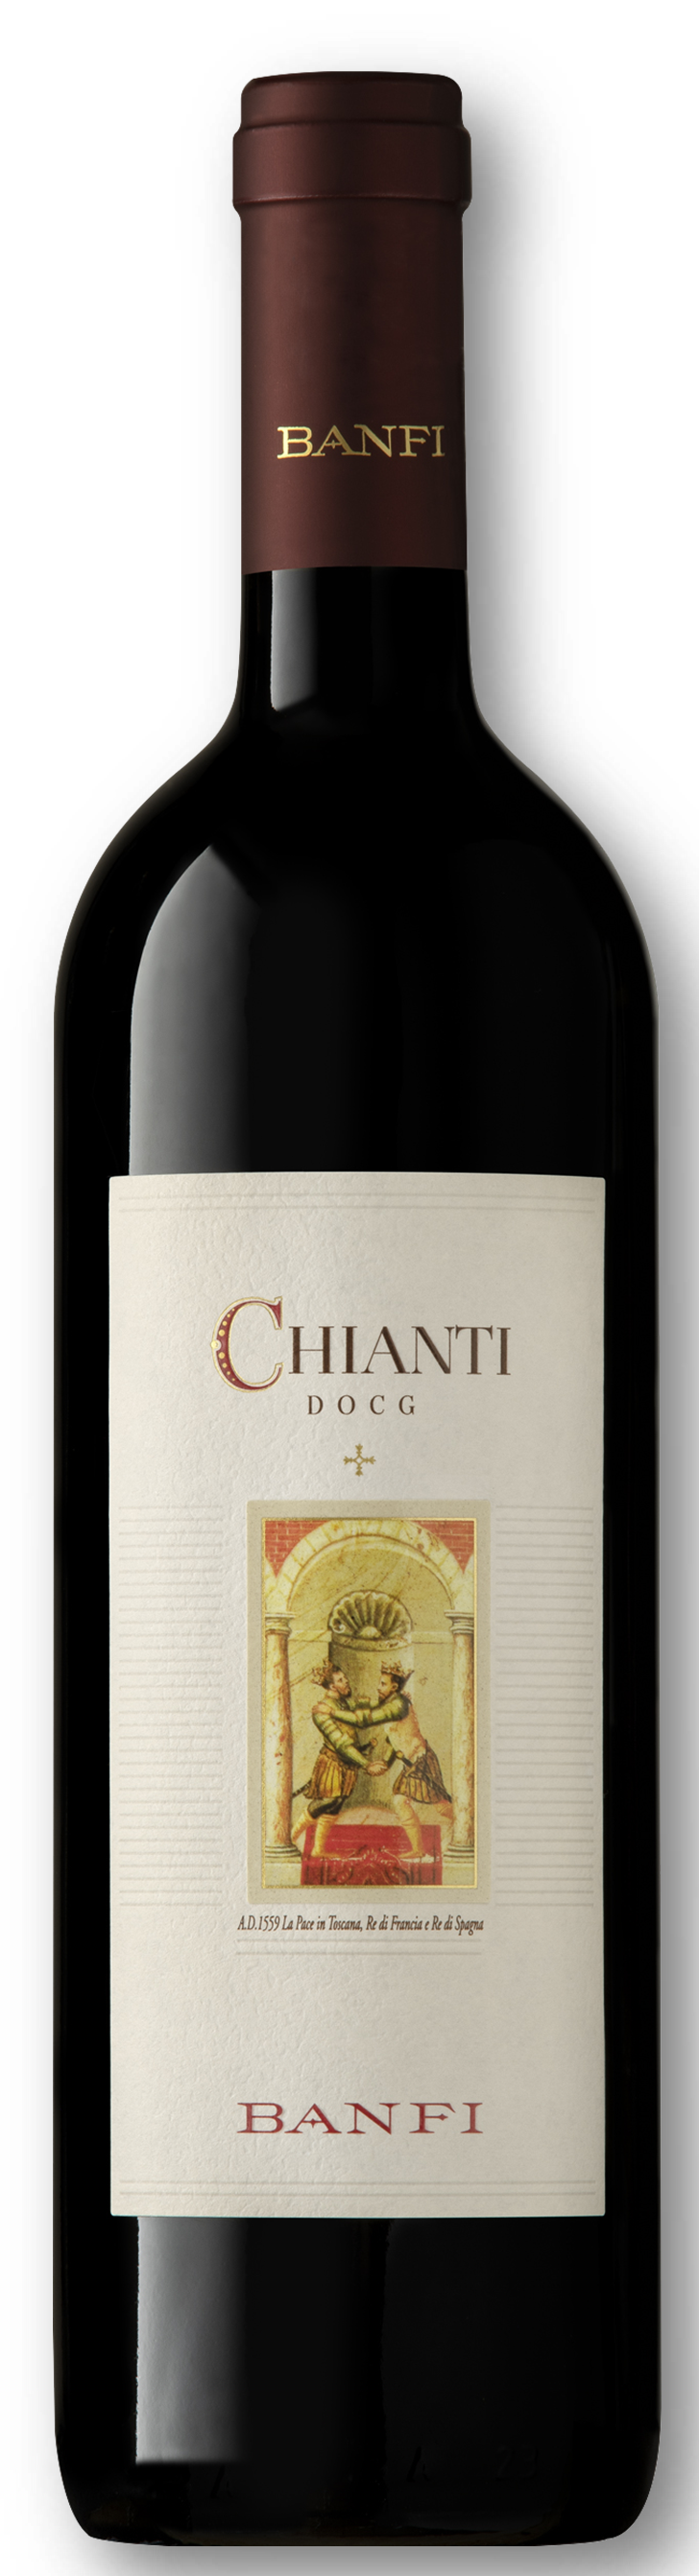 Chianti DOCG 0,75l Vino - 2021 Toskana Banfi Italia aus | Rotwein 13% | 